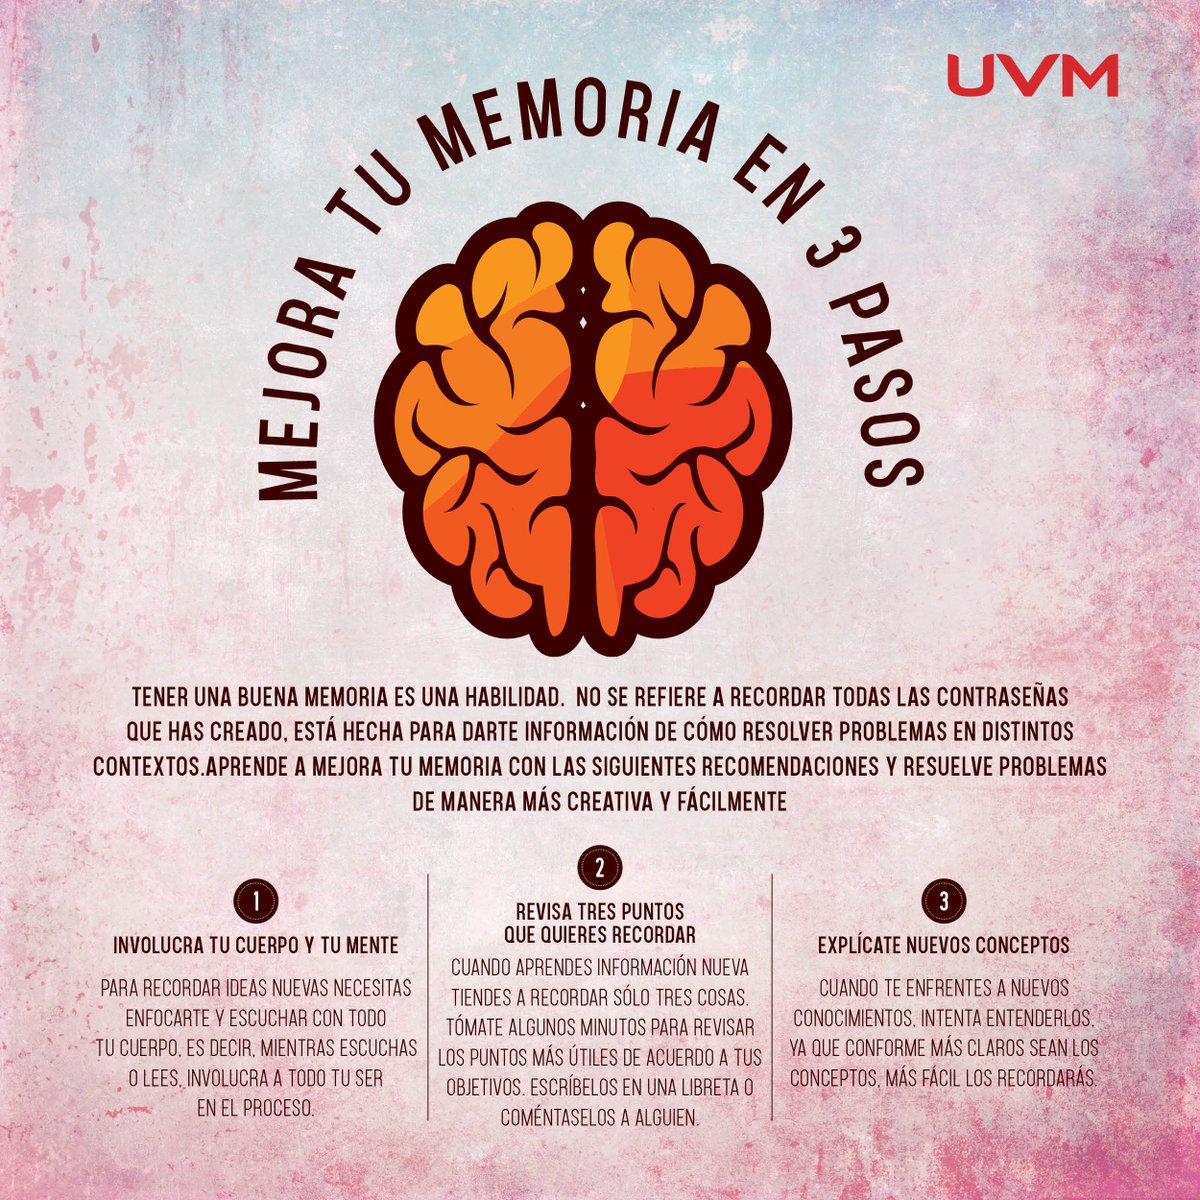 UVM on Twitter: "Checa estos tips para estimular tu memoria:  https://t.co/DmcpbWuNPH" / Twitter